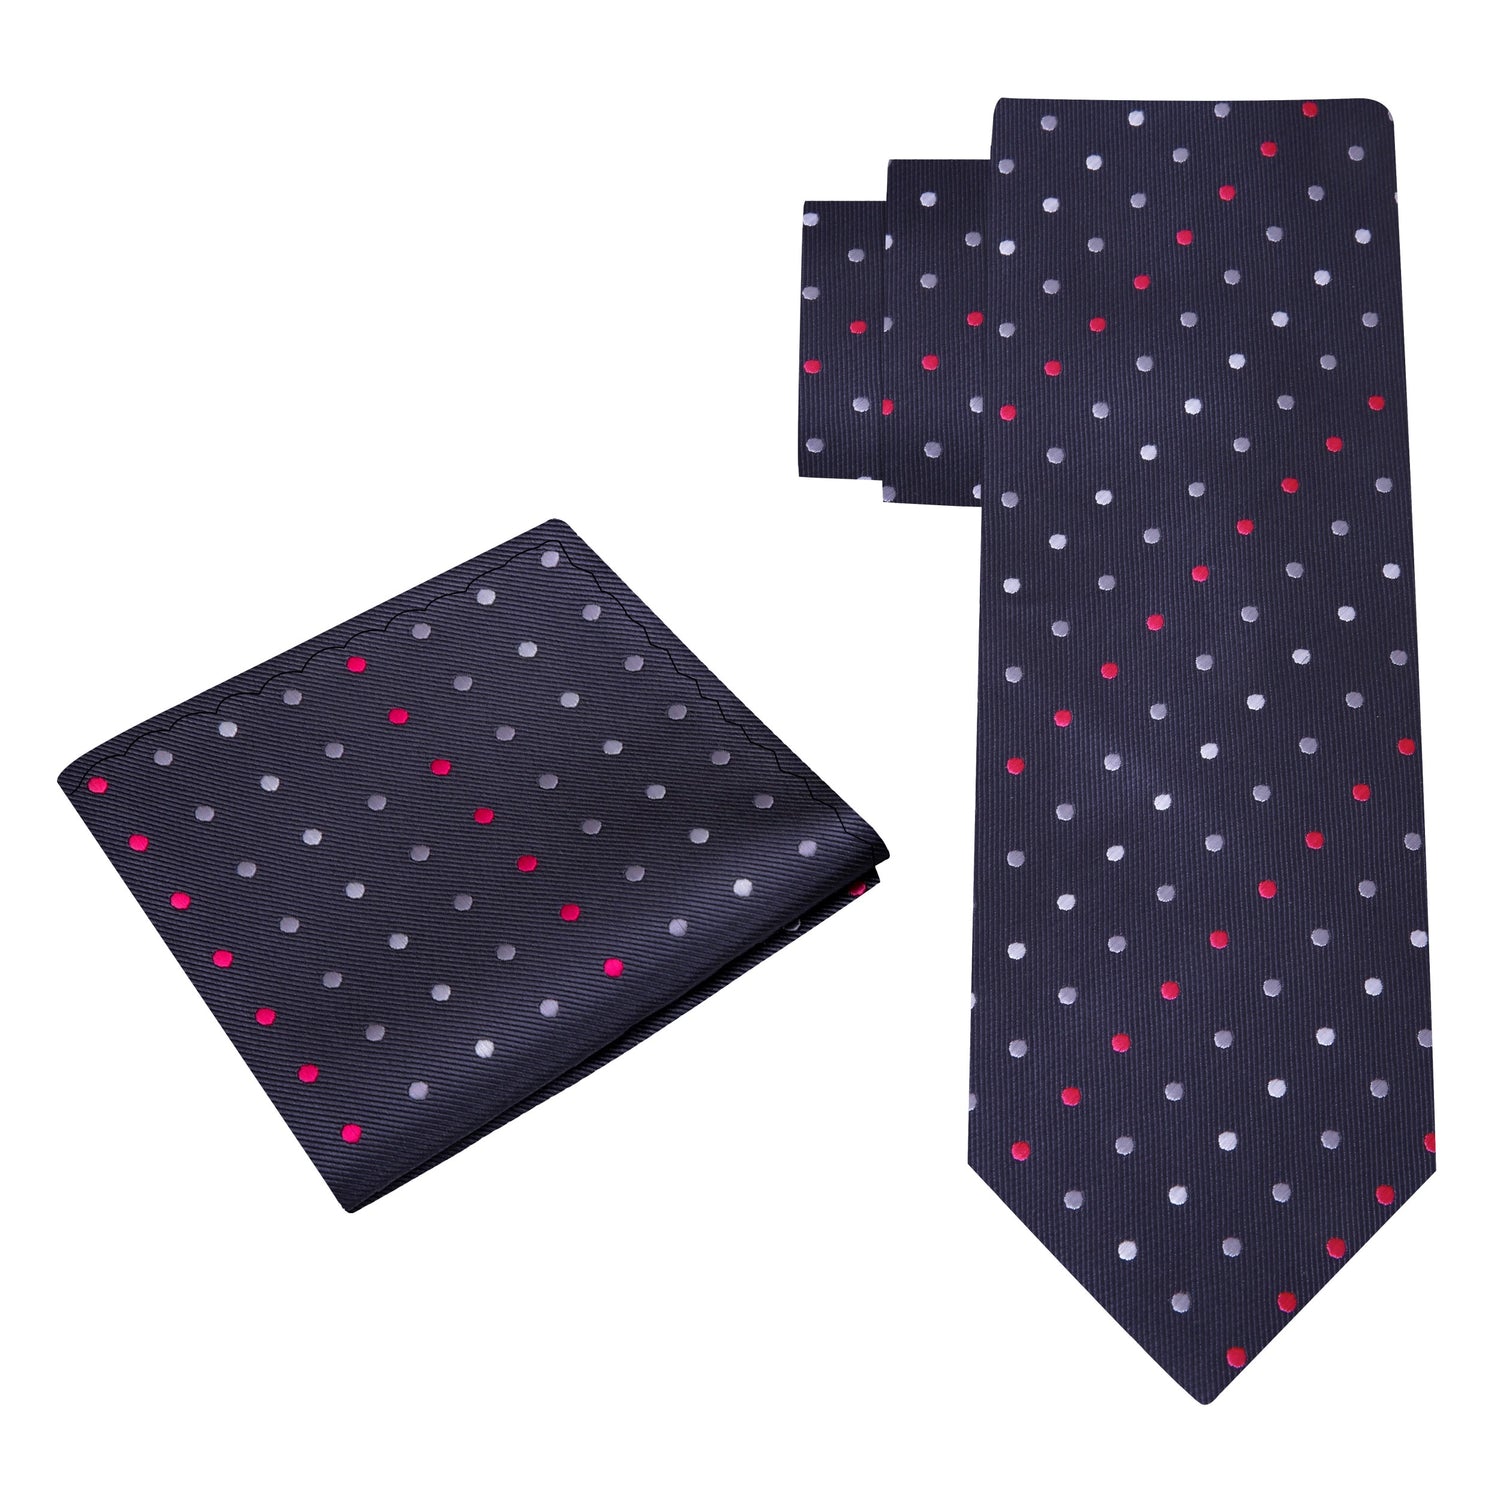 Alt view: A Charcoal, White, Pink Polka Dot Pattern Silk Necktie, Matching Pocket Square